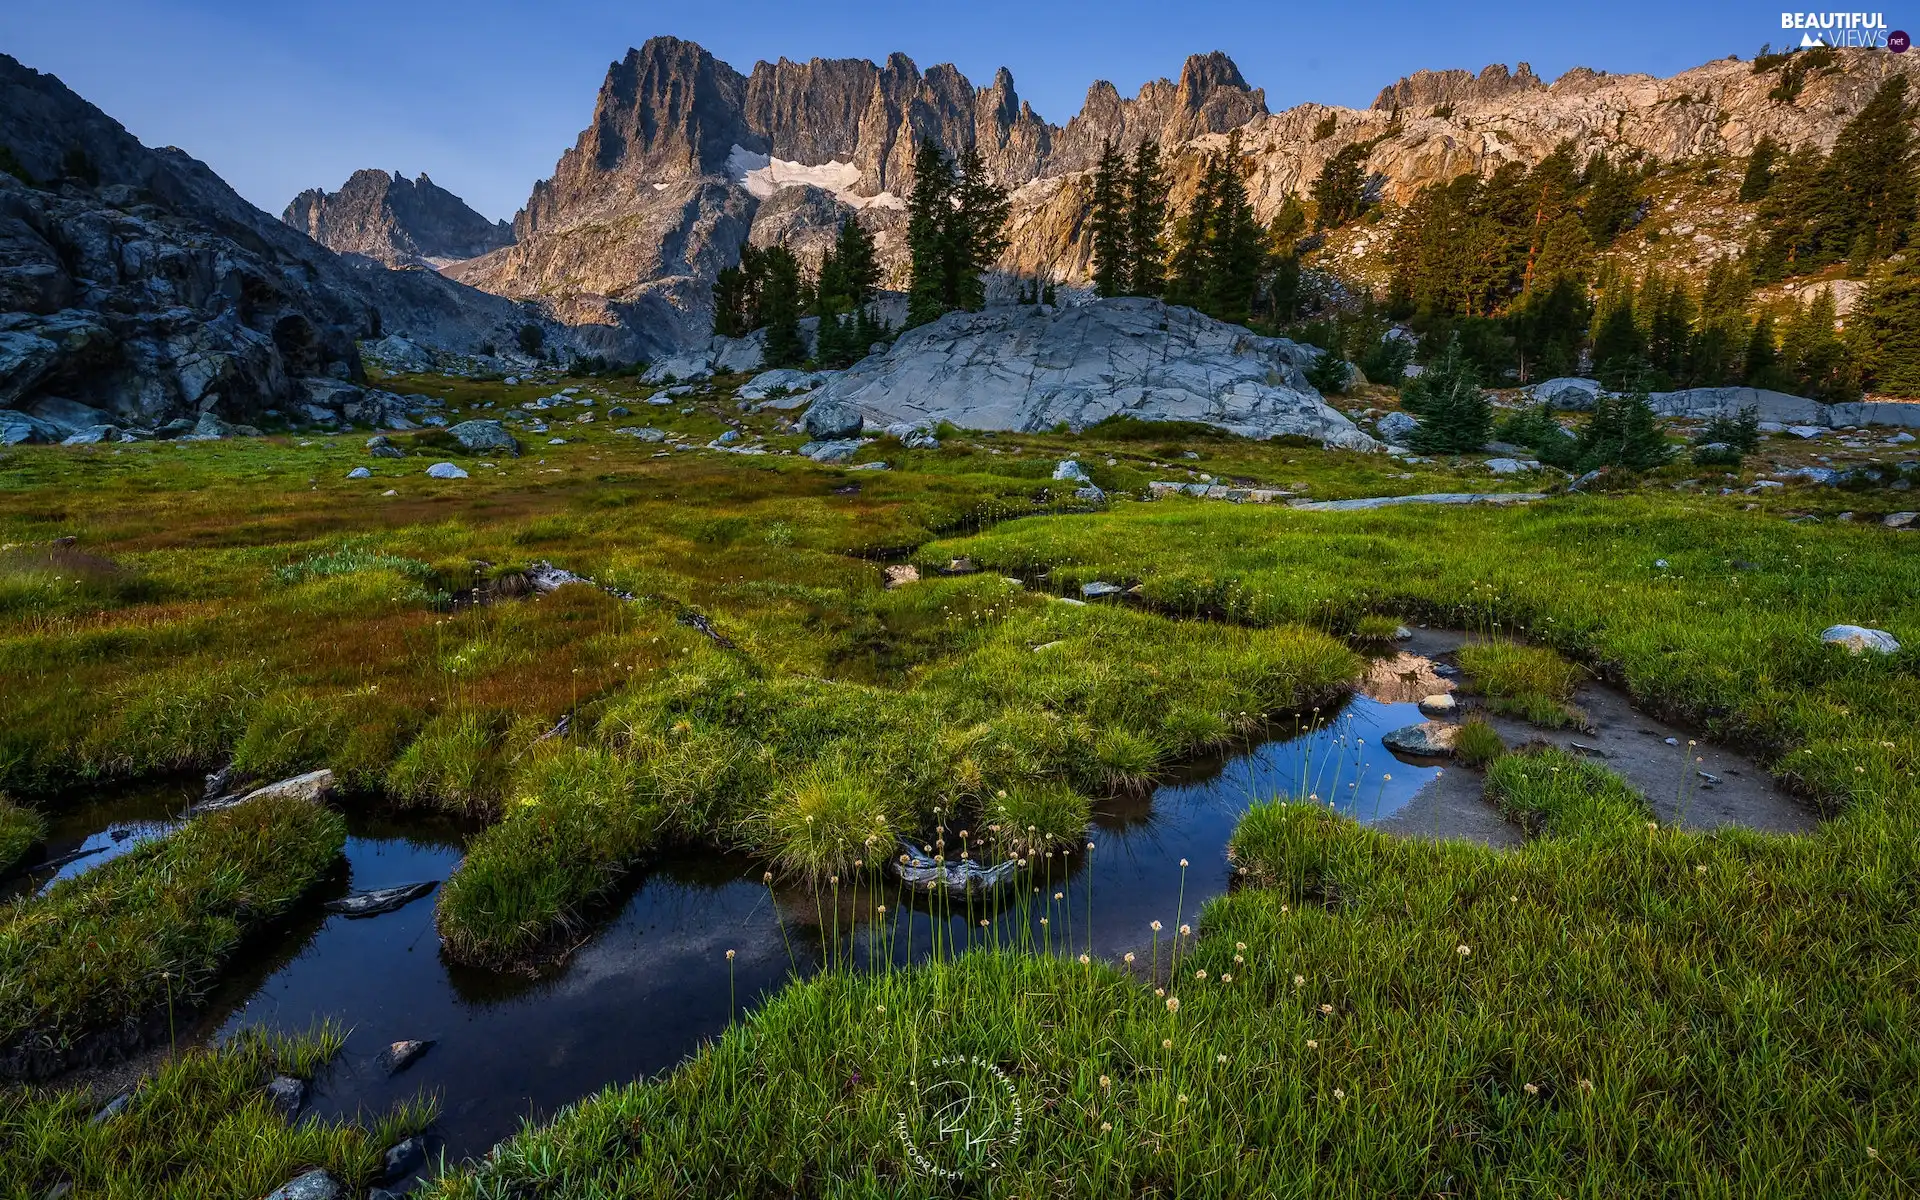 Meadow, grass, The United States, rocks, California, Sierra Nevada, Mountains, pool